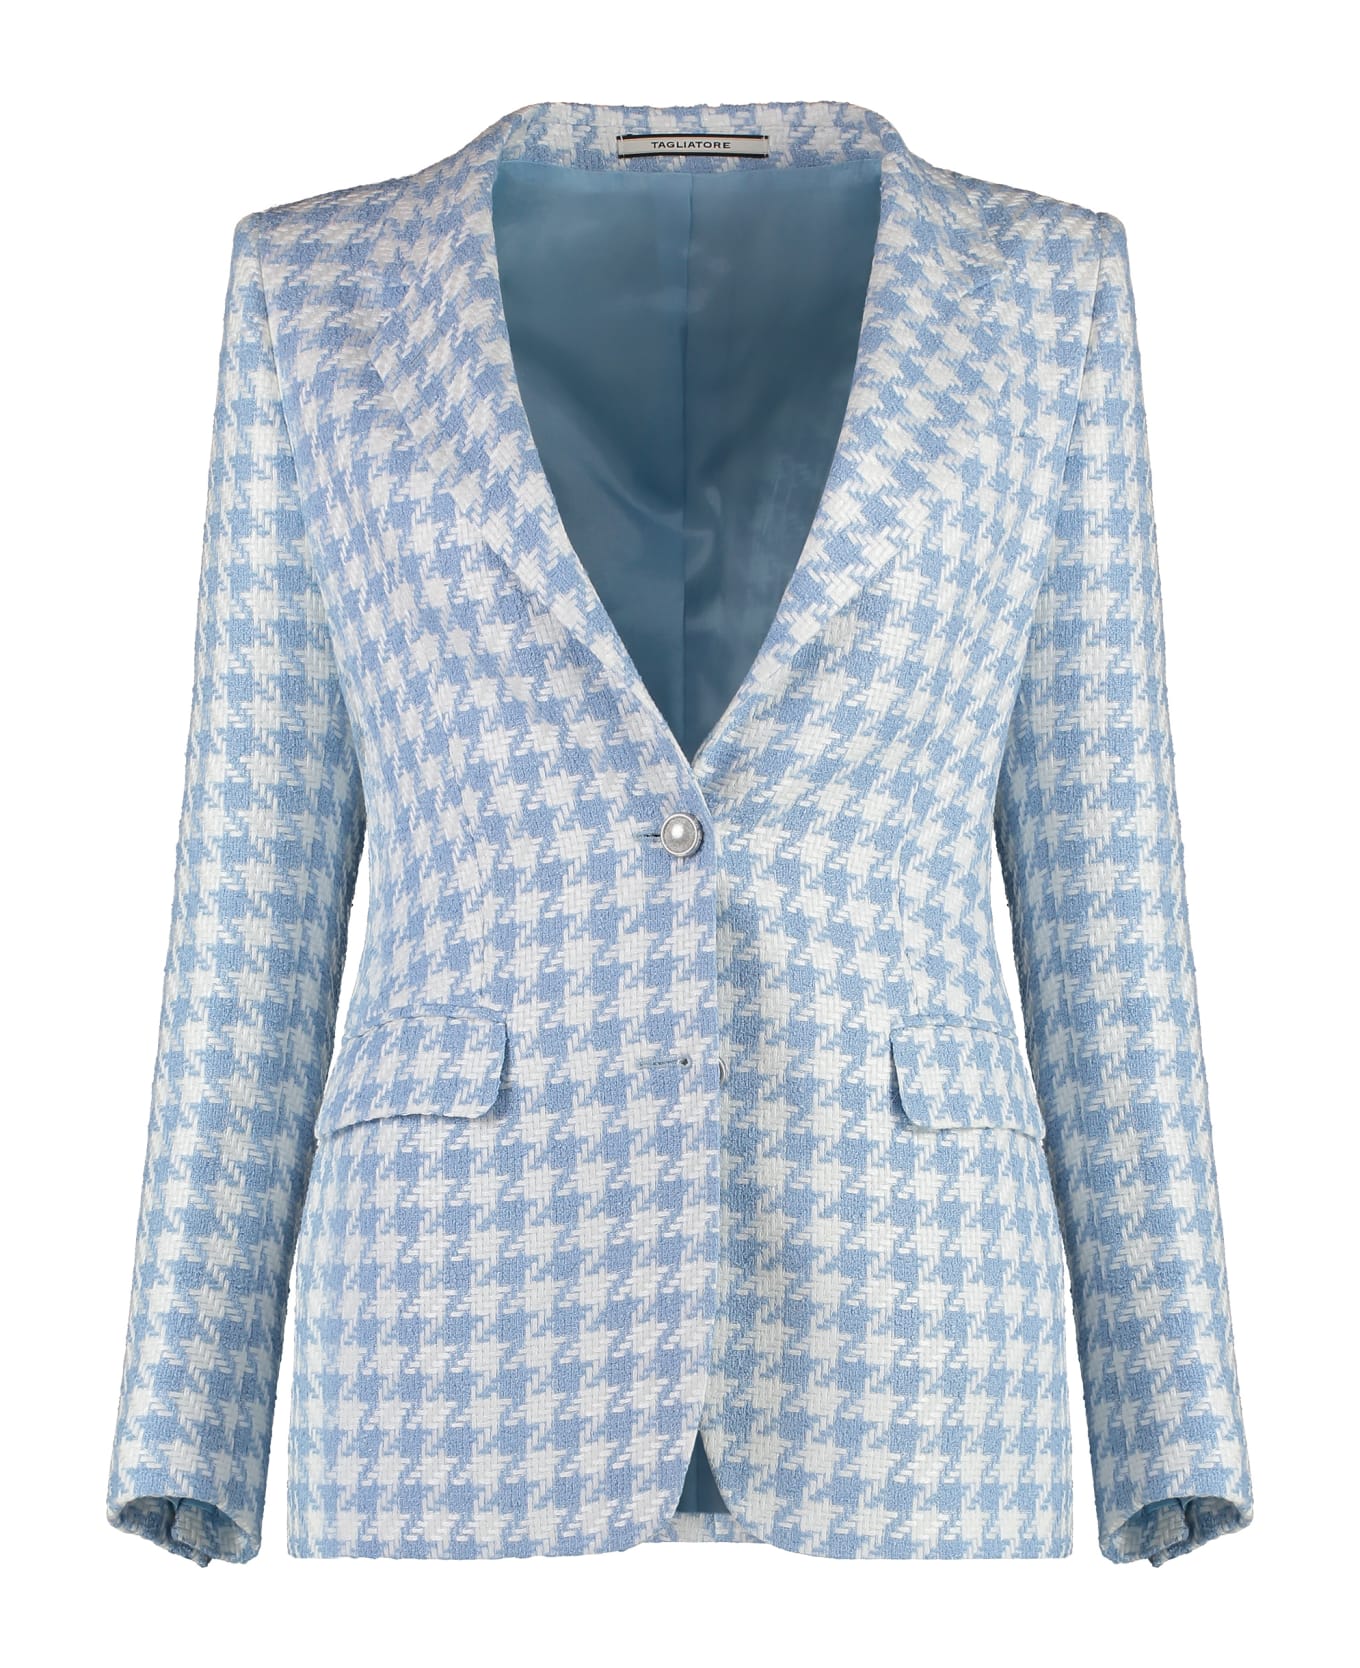 Tagliatore 0205 J-parigi Single-breasted Two-button Jacket - Light Blue